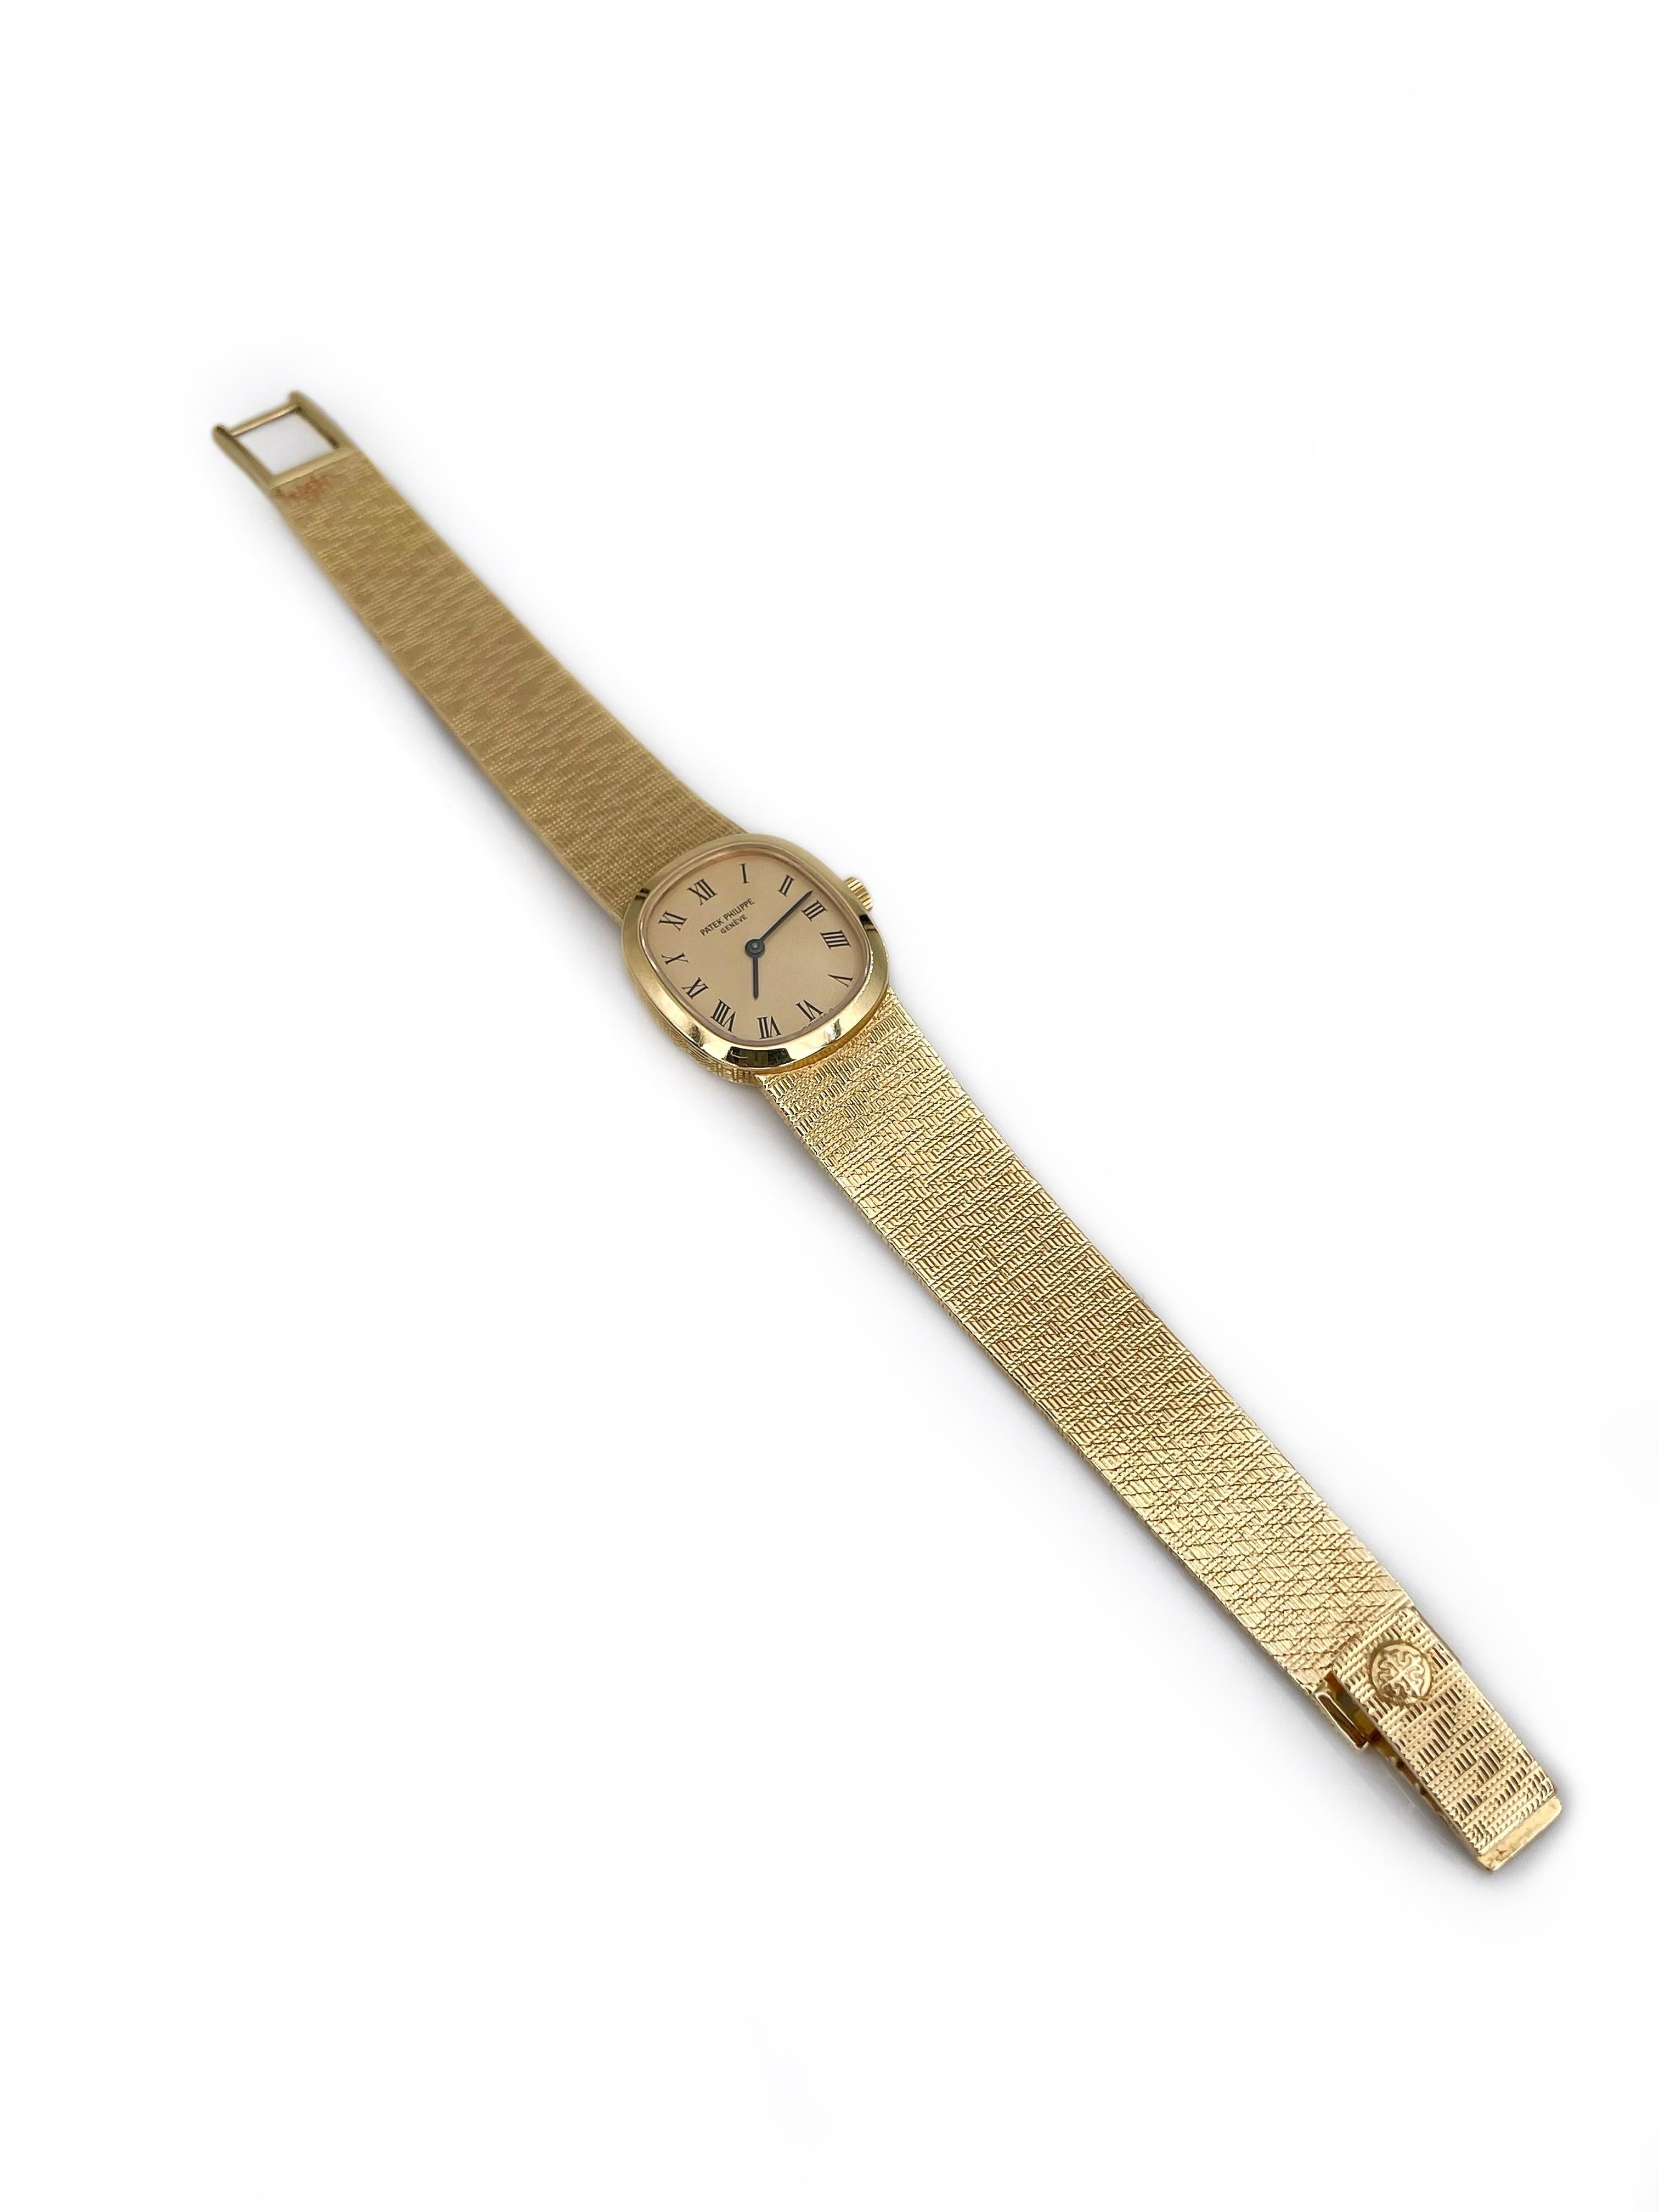 1970s patek philippe watch